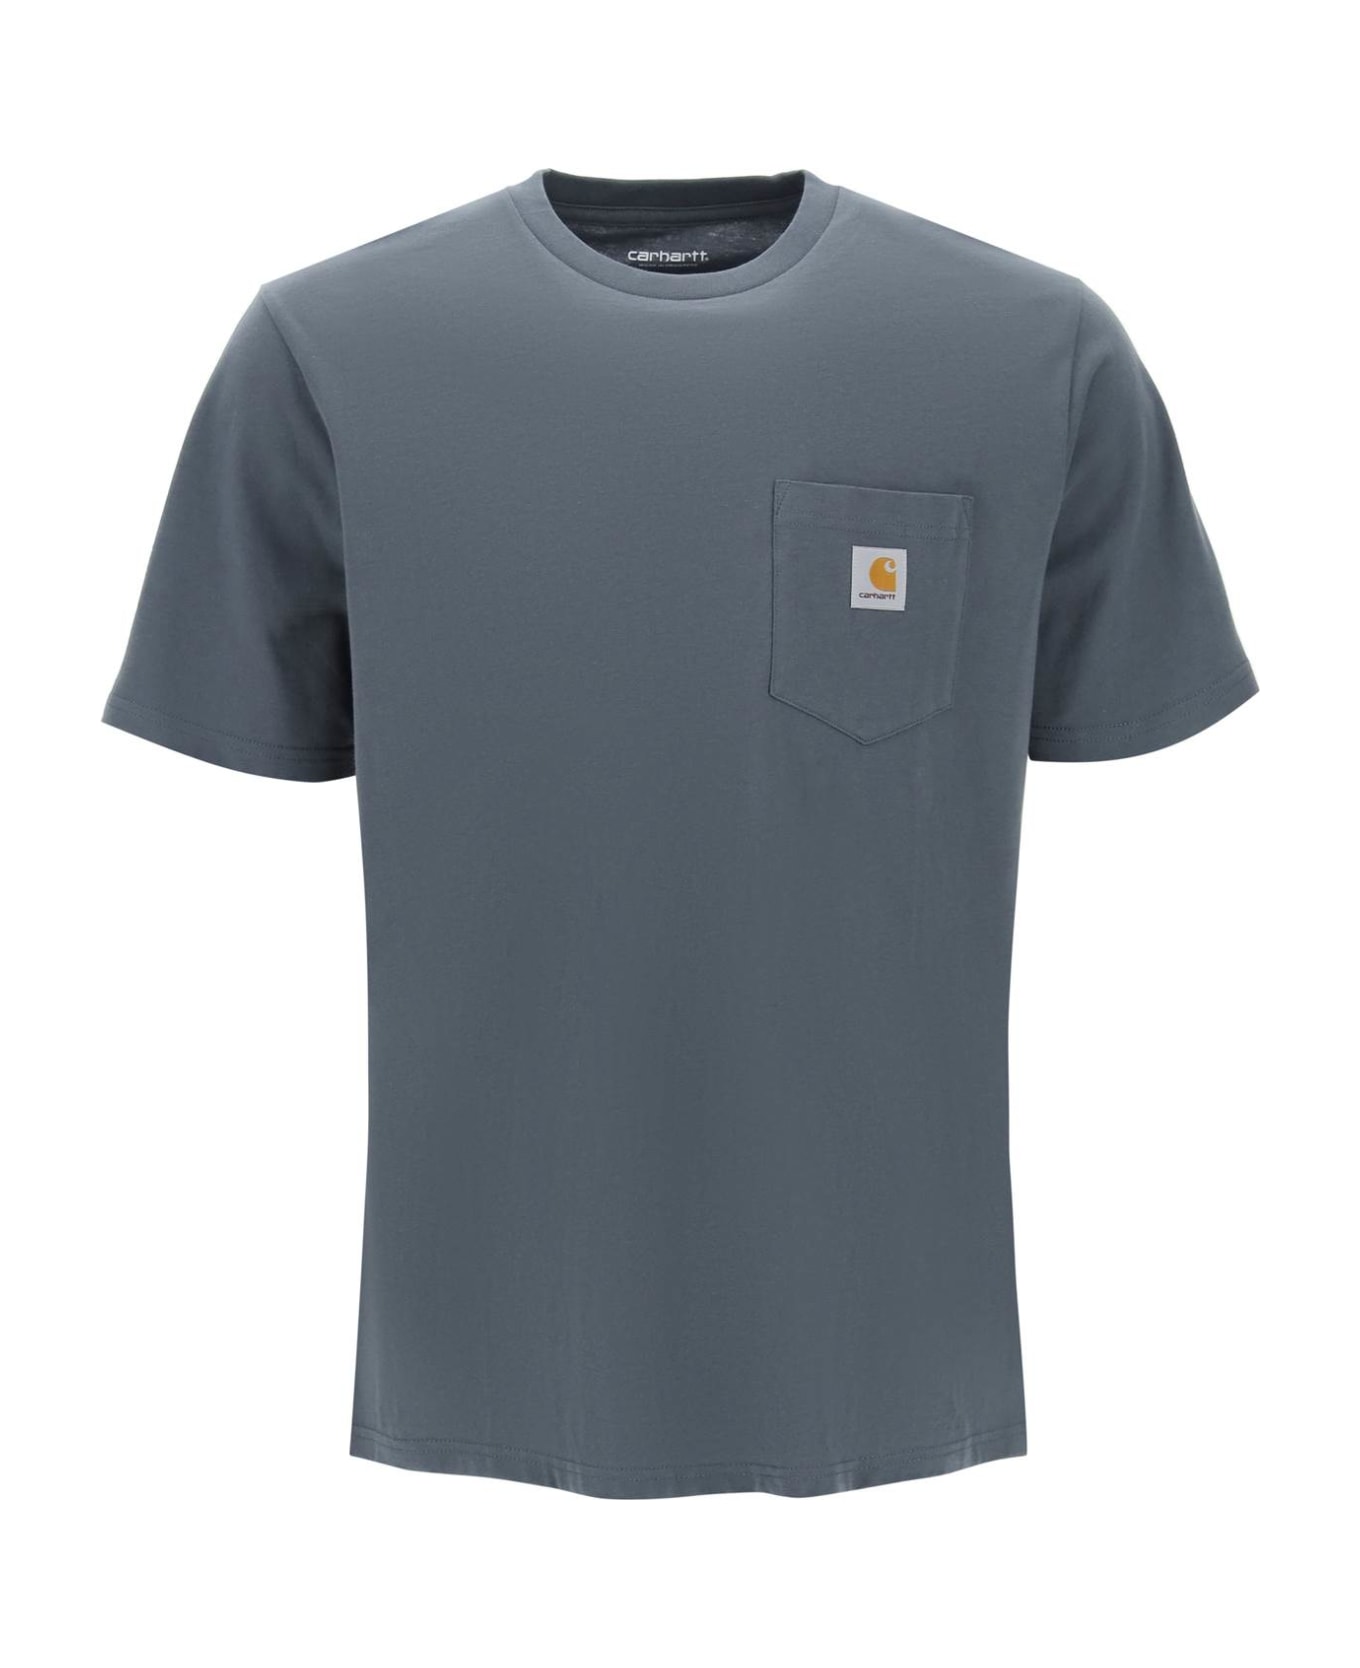 Carhartt T-shirt With Chest Pocket - JURA (Grey)